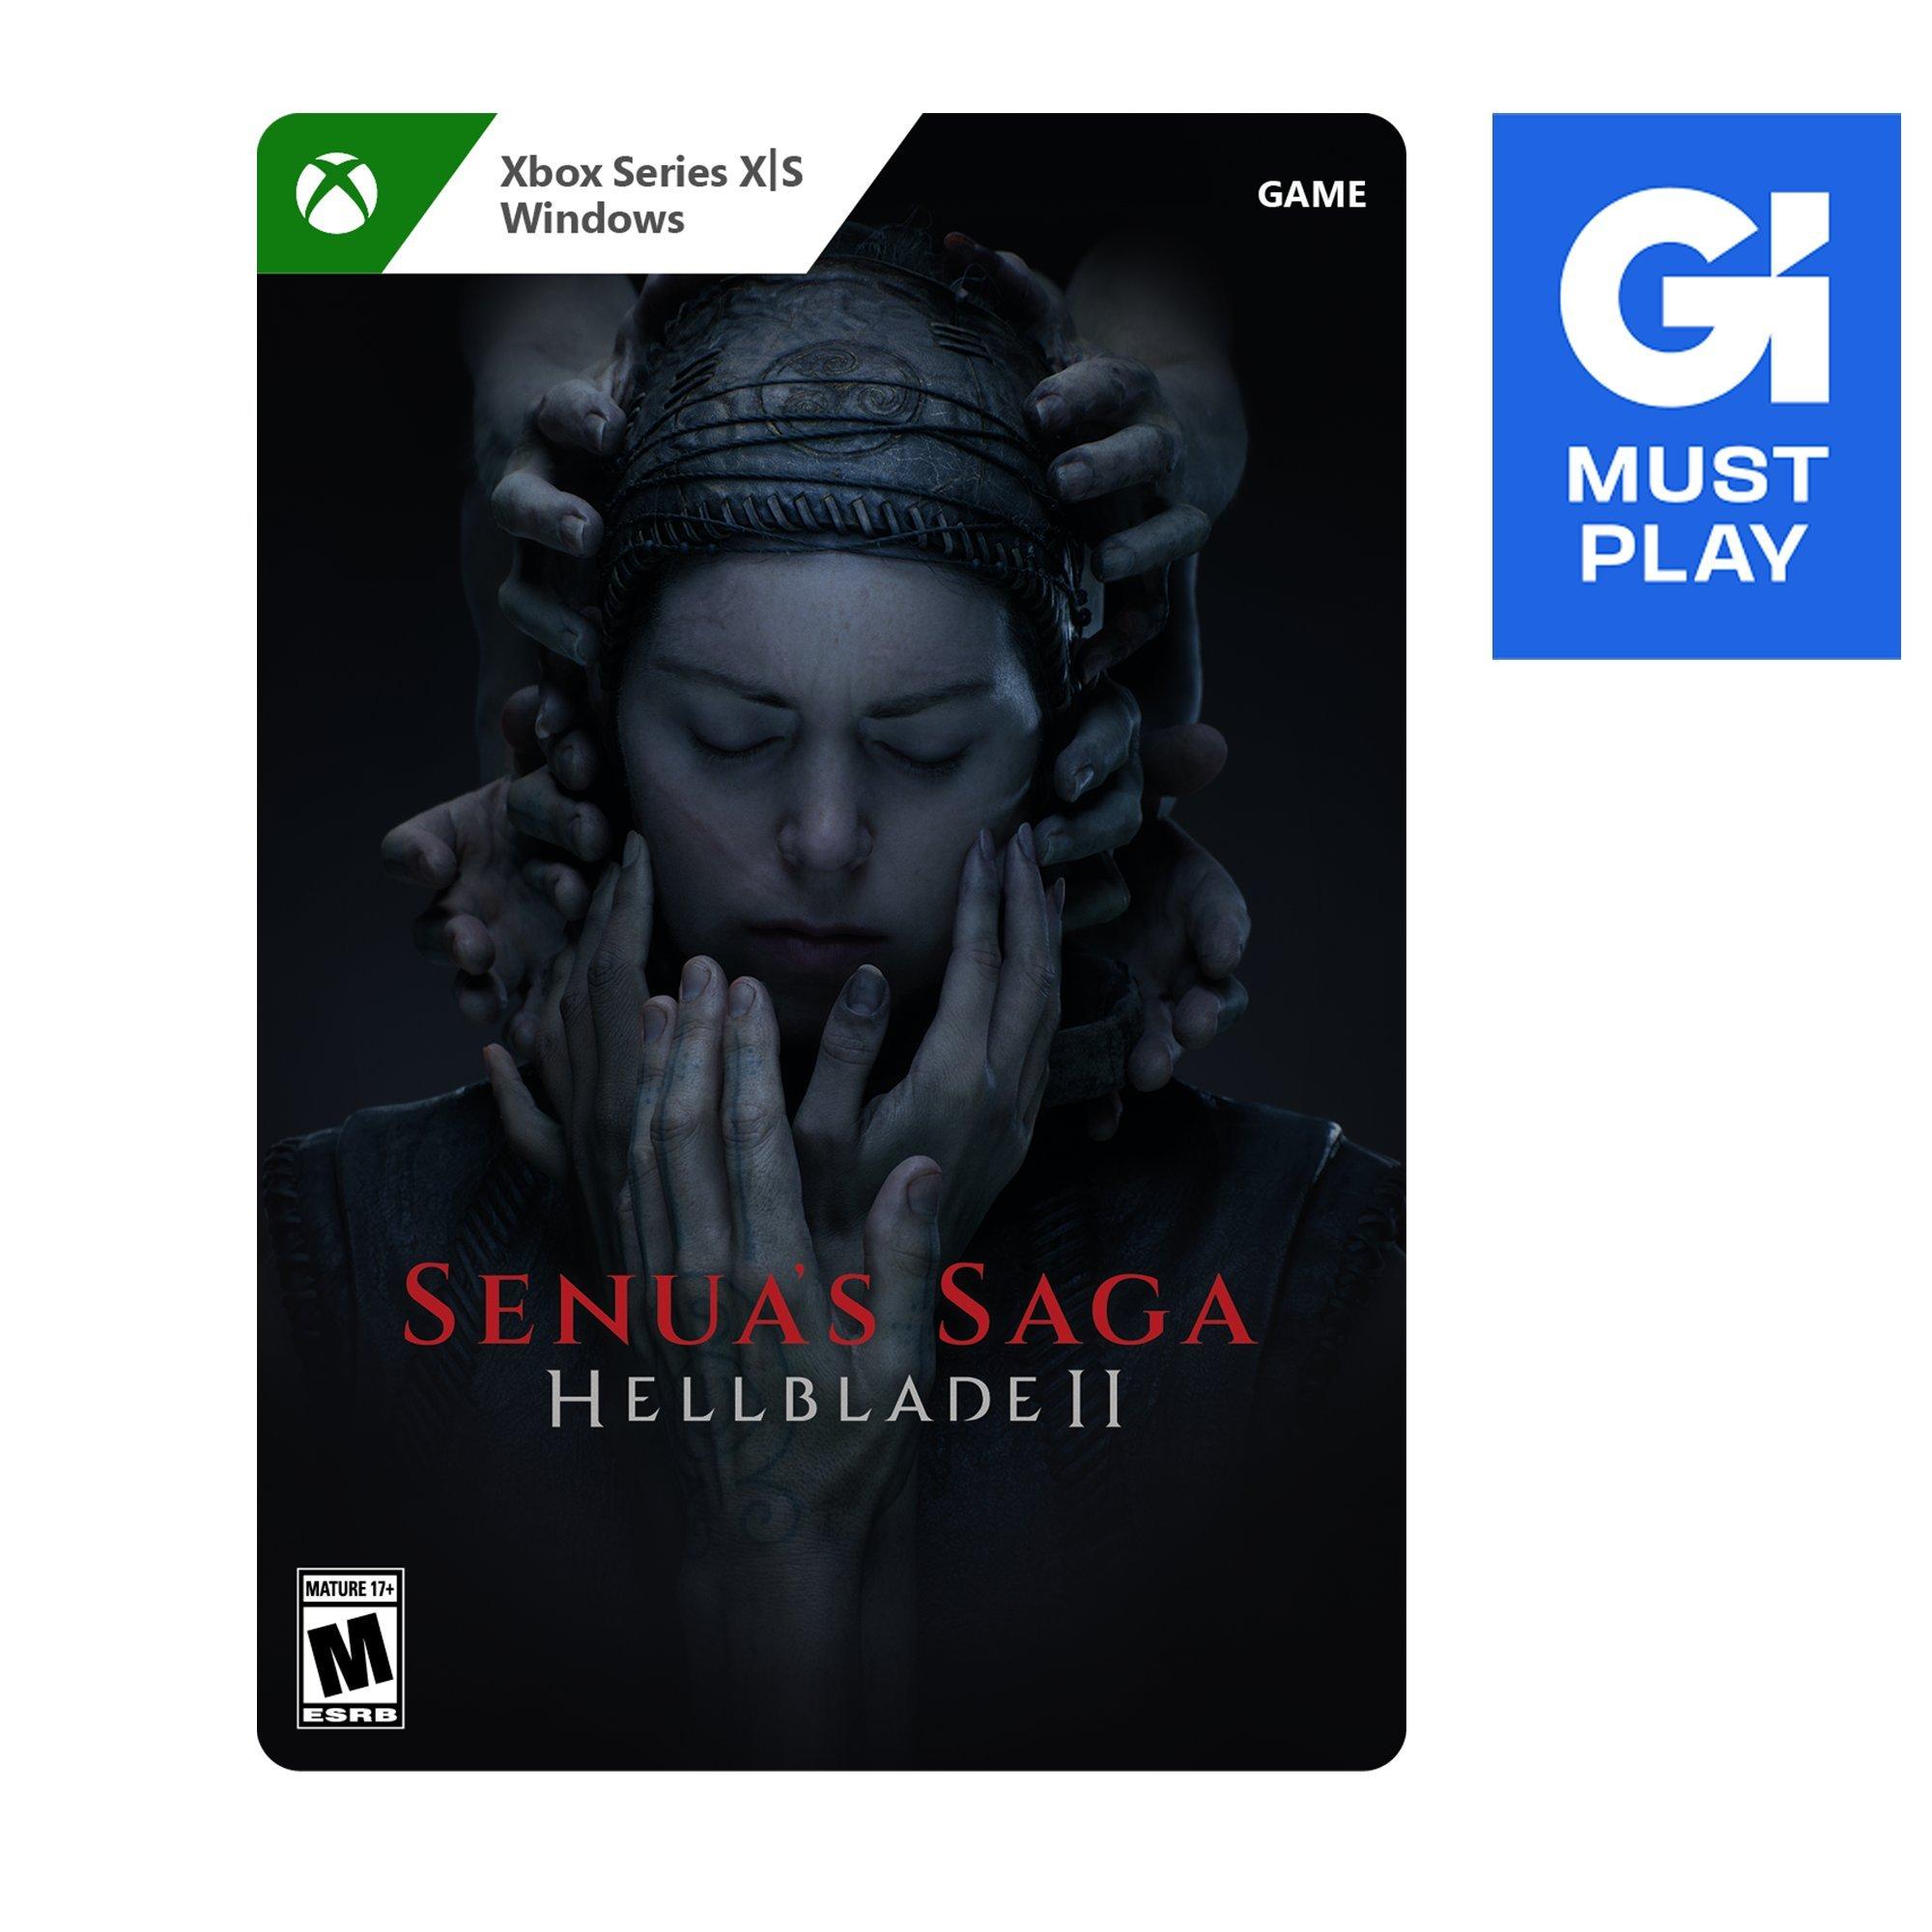 Senua's Saga: Hellblade 2 Is Coming to the Xbox Series X